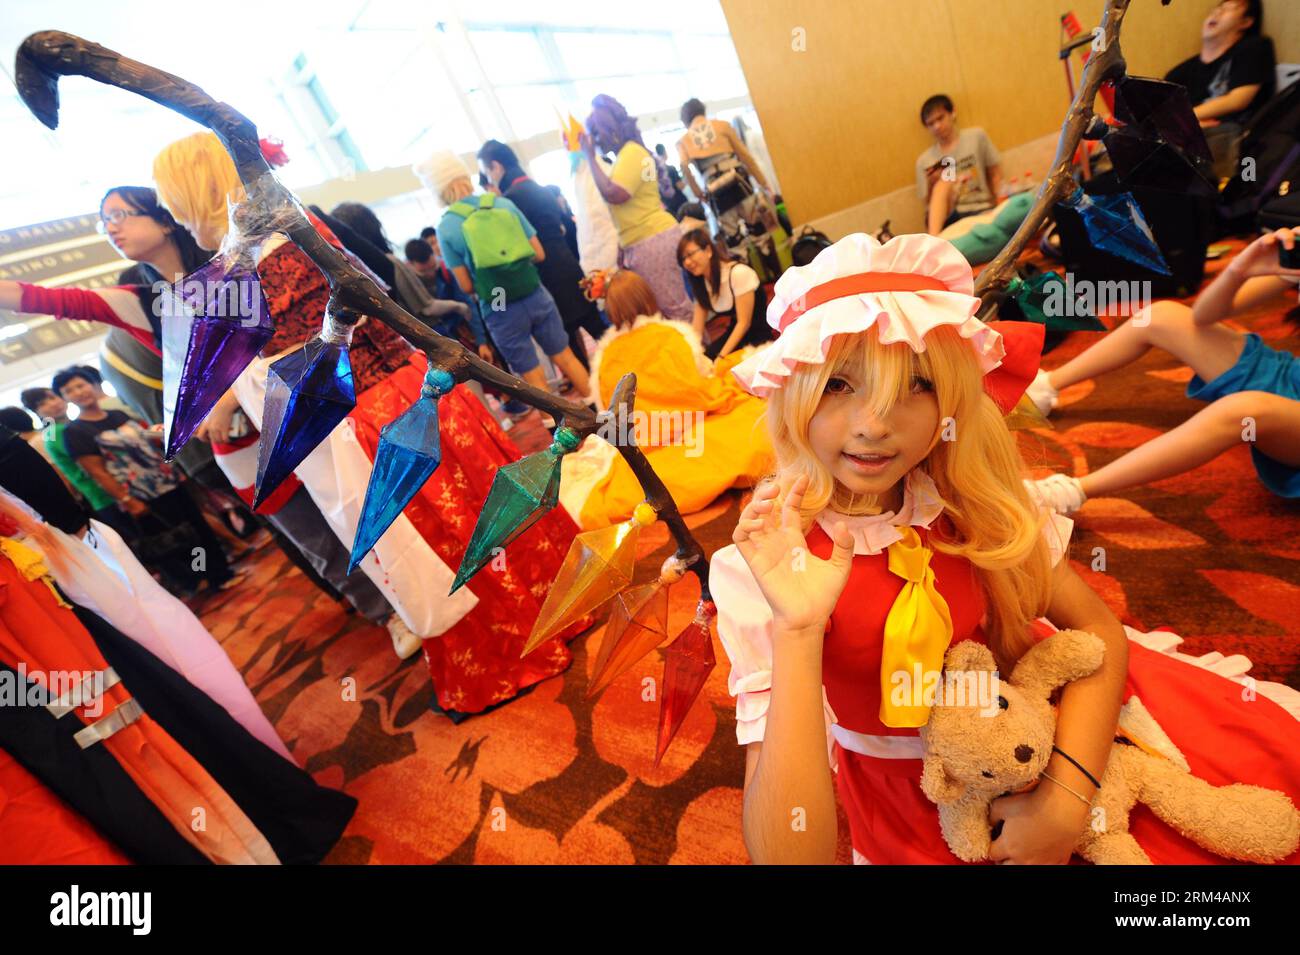 Cosplay anime japonés — Foto editorial de stock © redthirteen1 #141996592